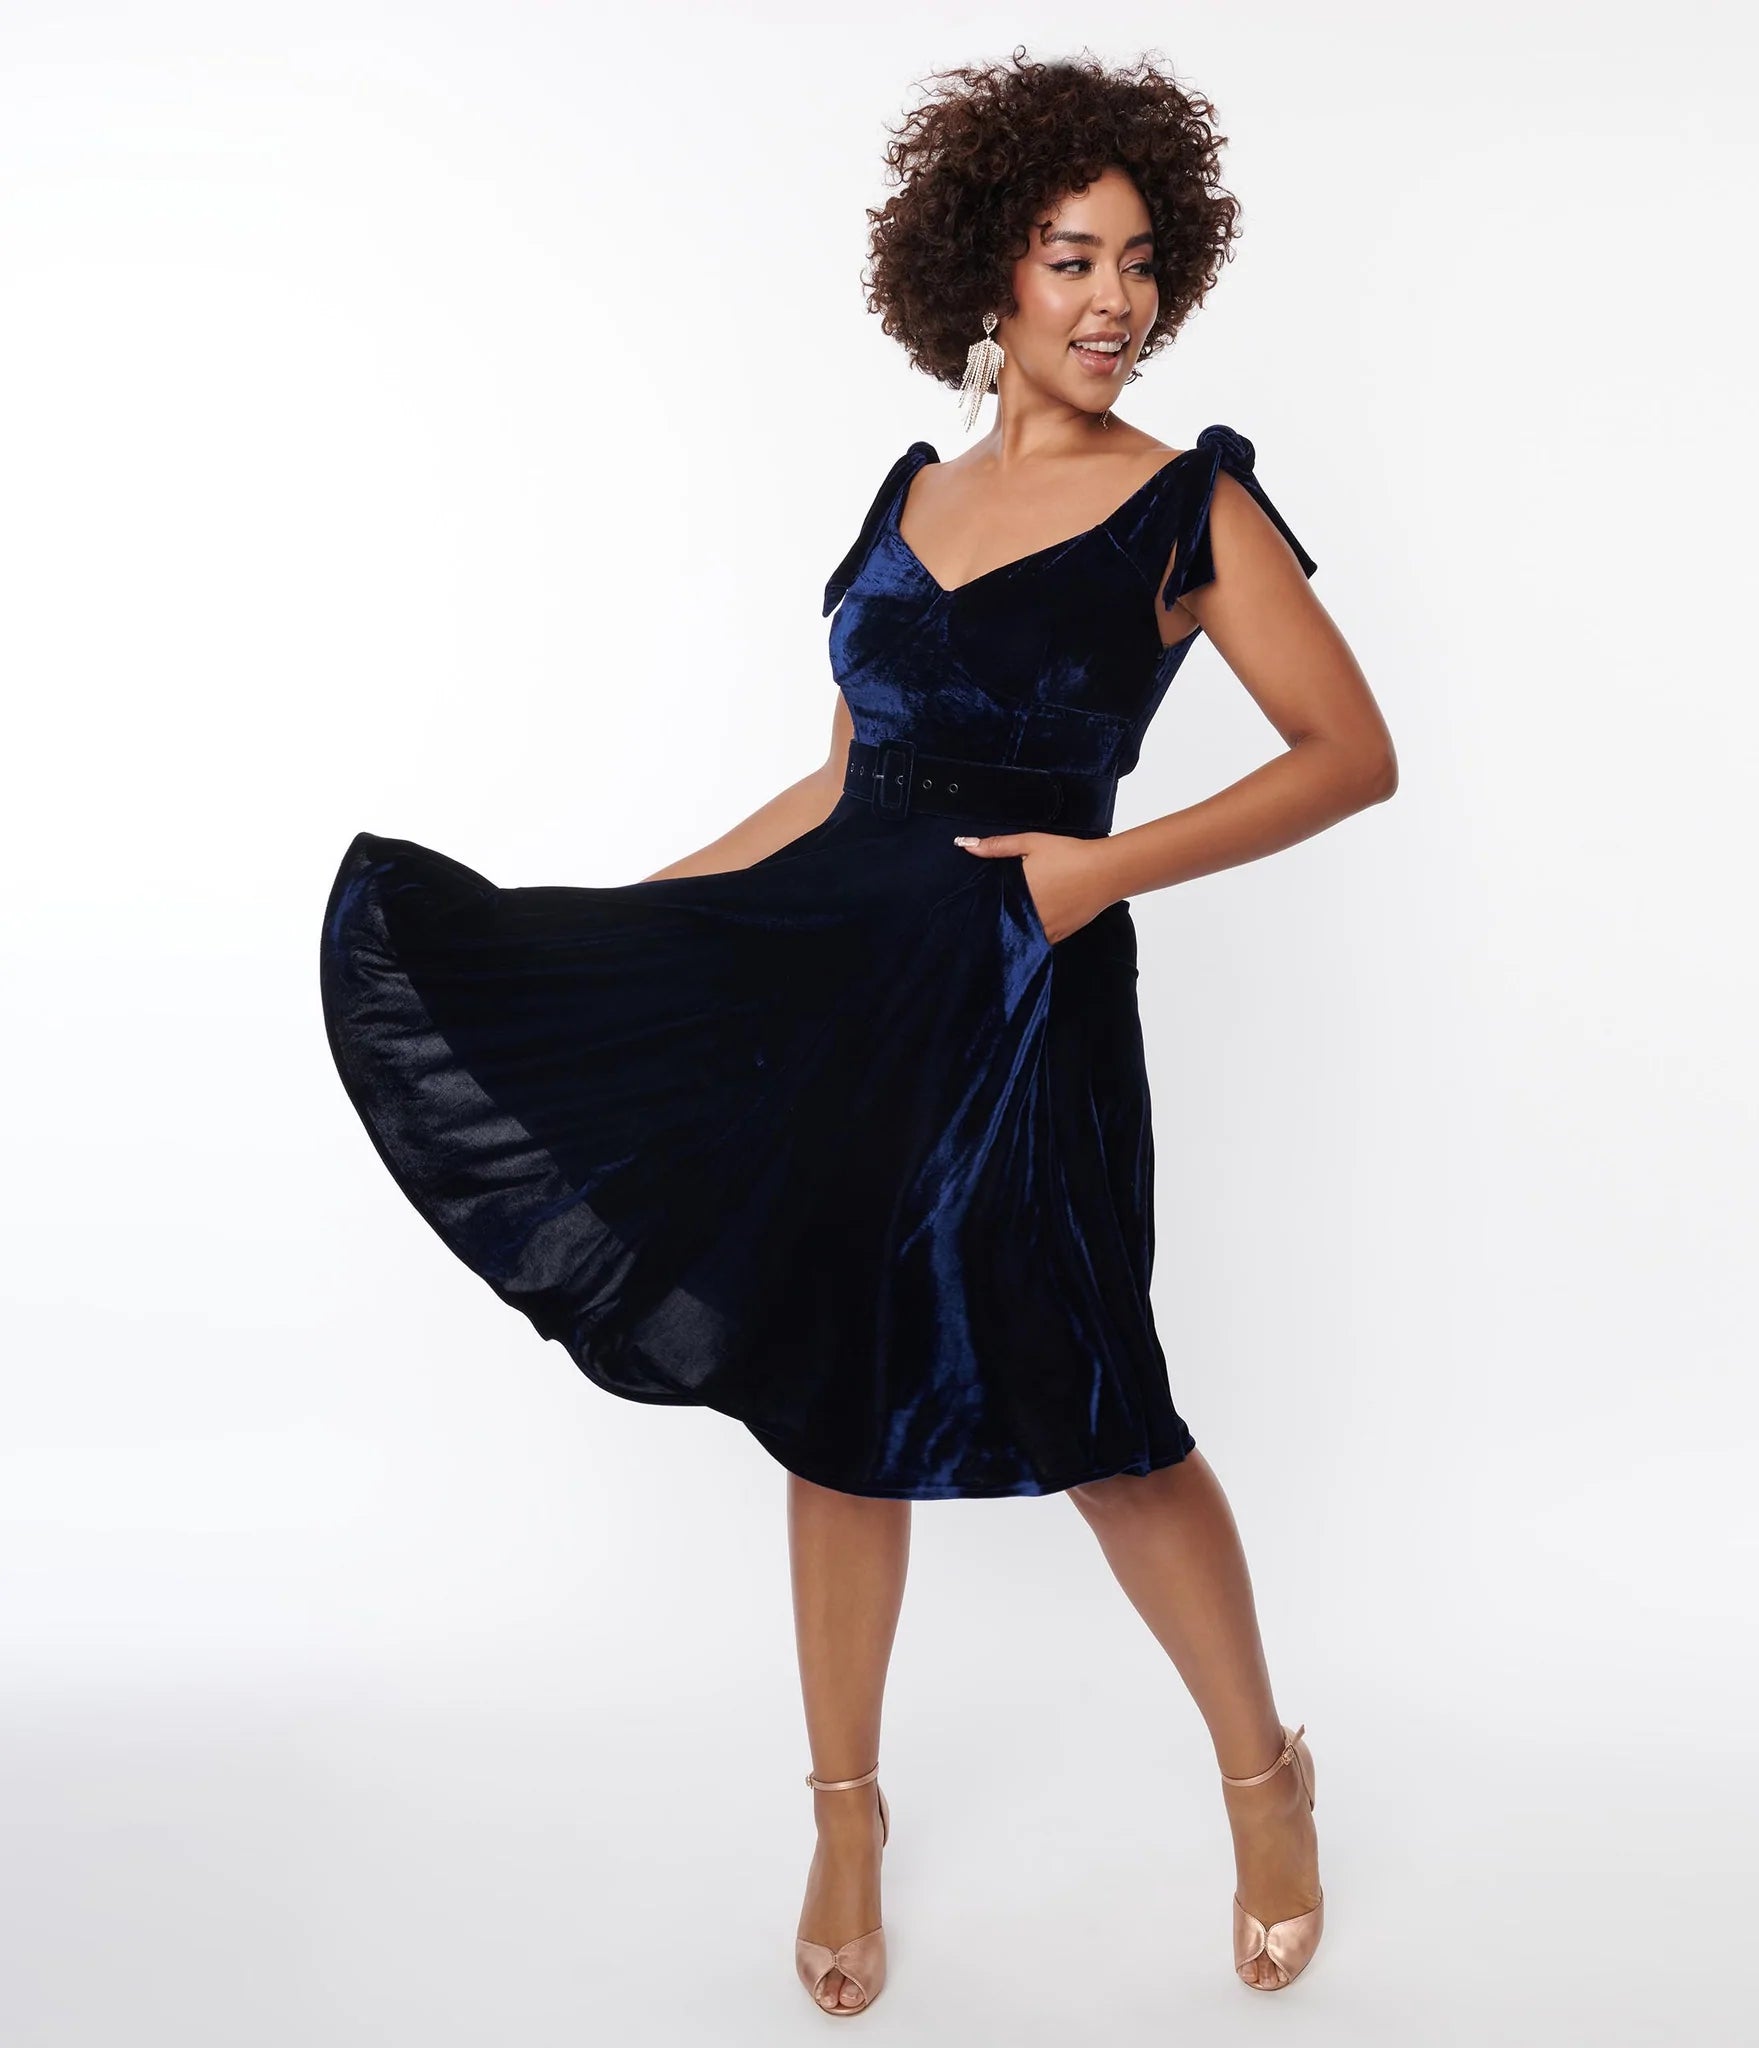 Velvet Swing dress with pockets 1940s and 1950s inspired